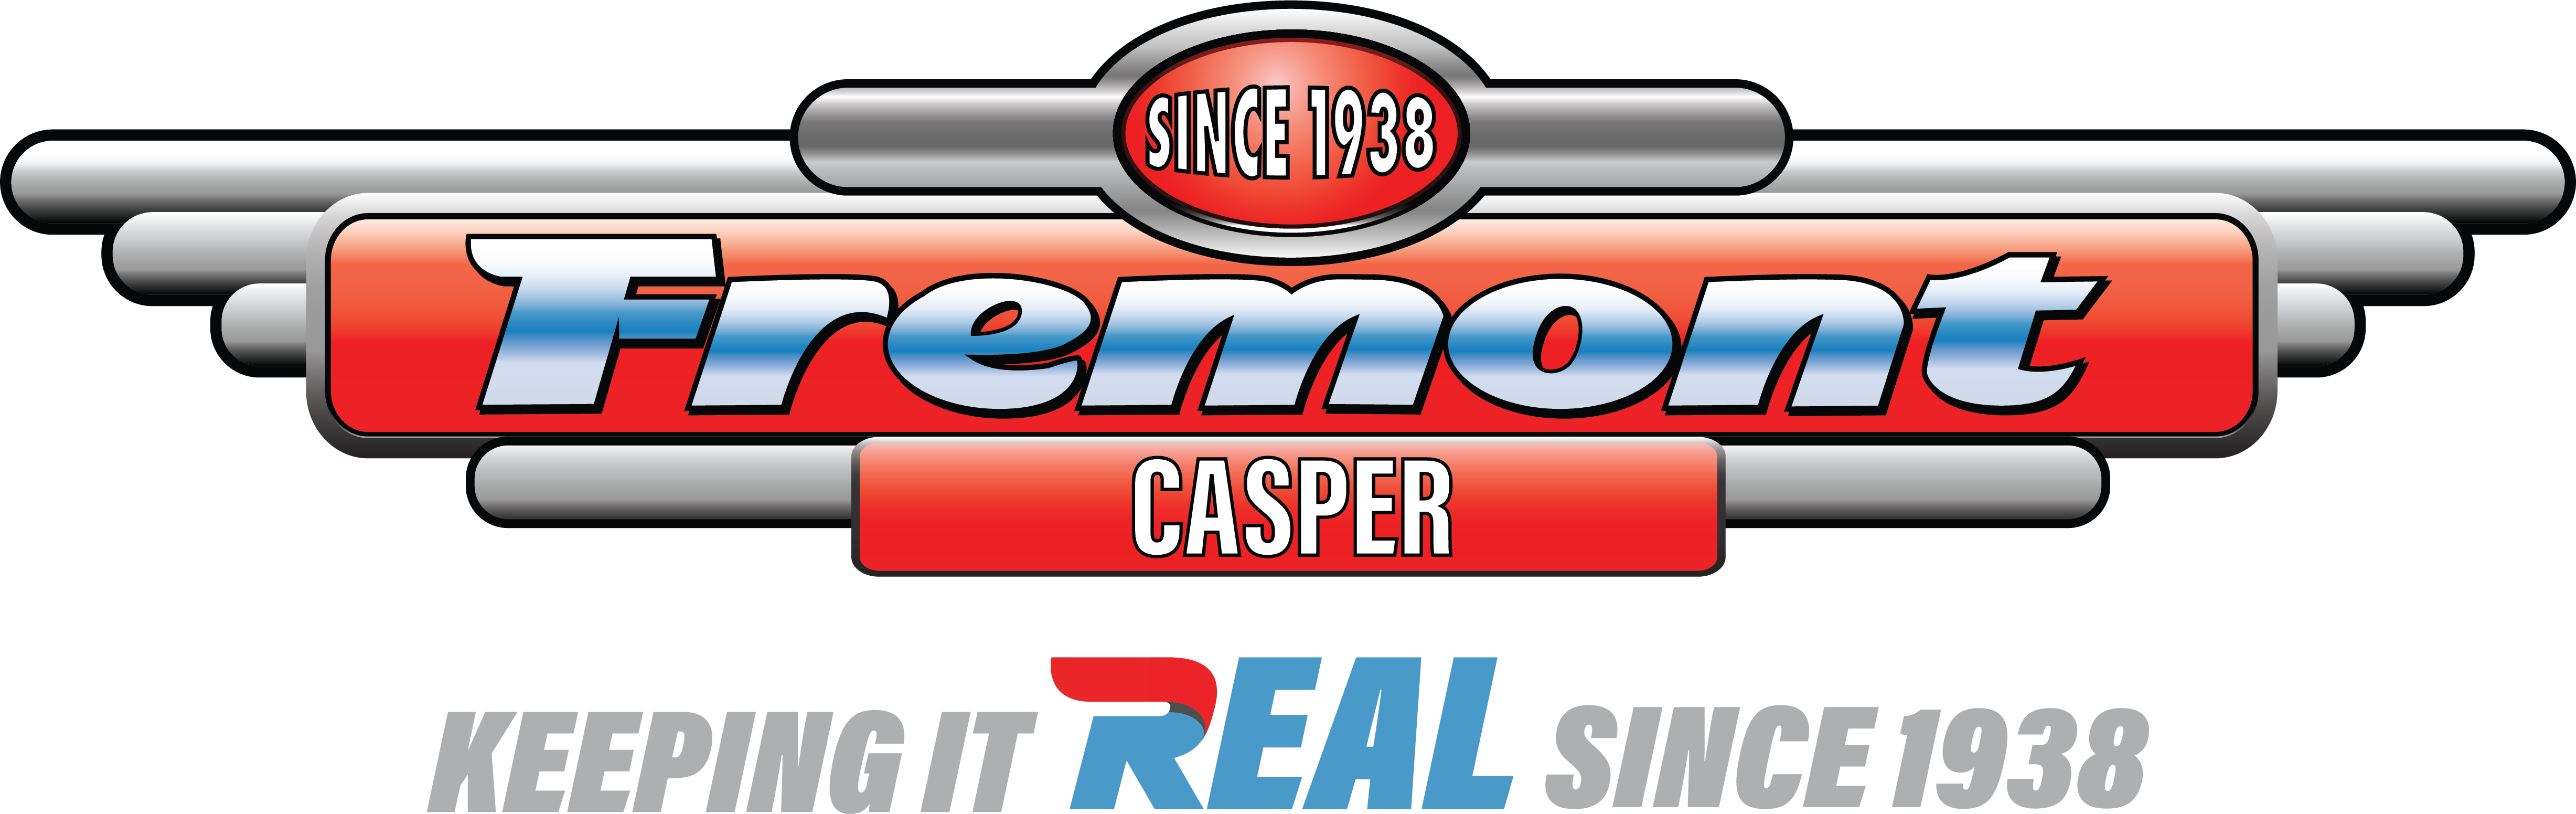 High Resolution Fremont Motor Casper Logo.png